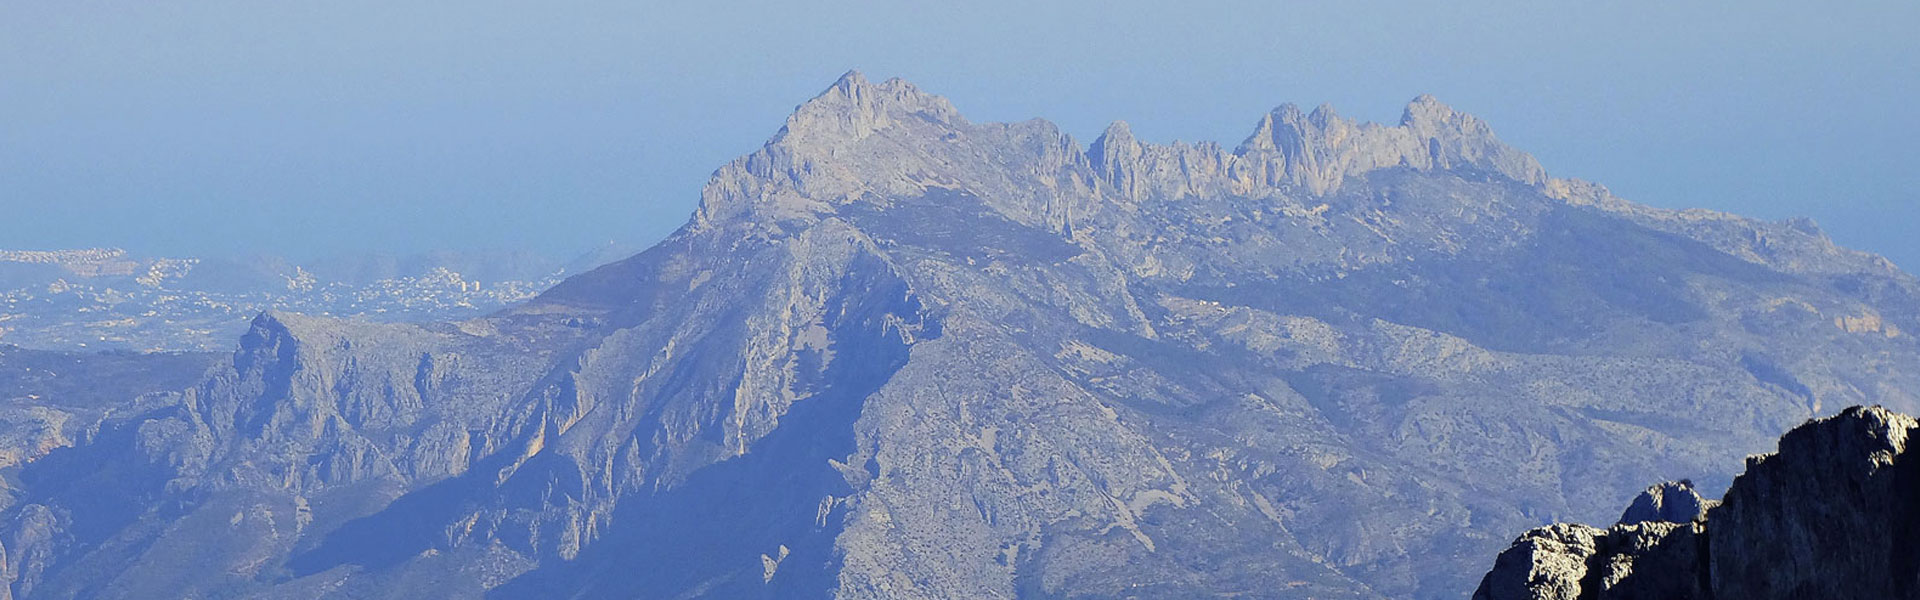 Cresta de Bernia